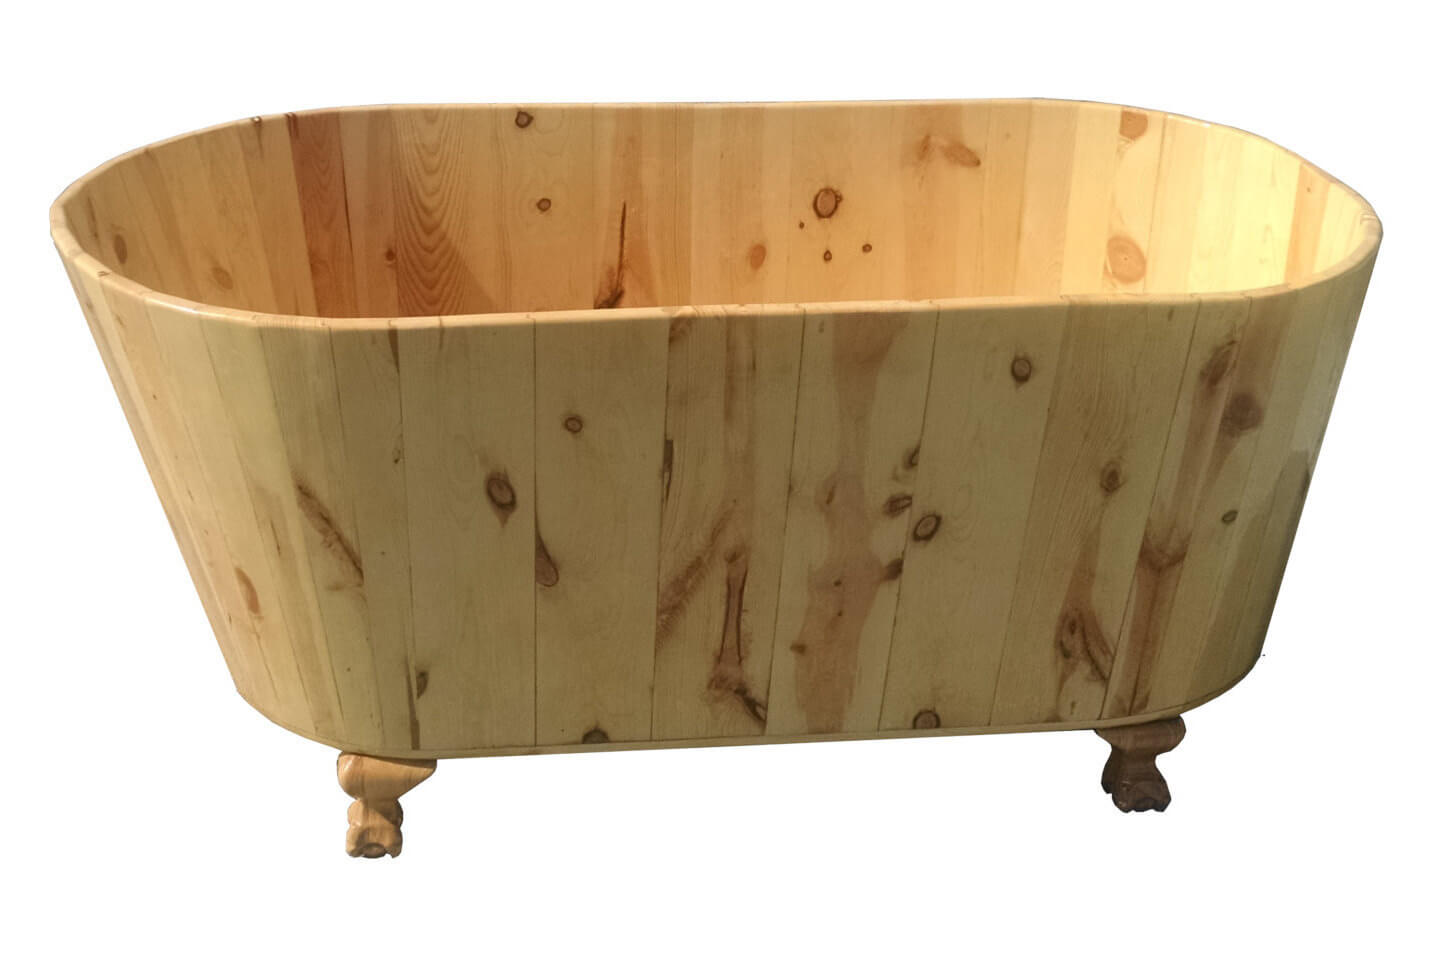 Pine wood bath tub from etsy seller Driftwood Tubs.